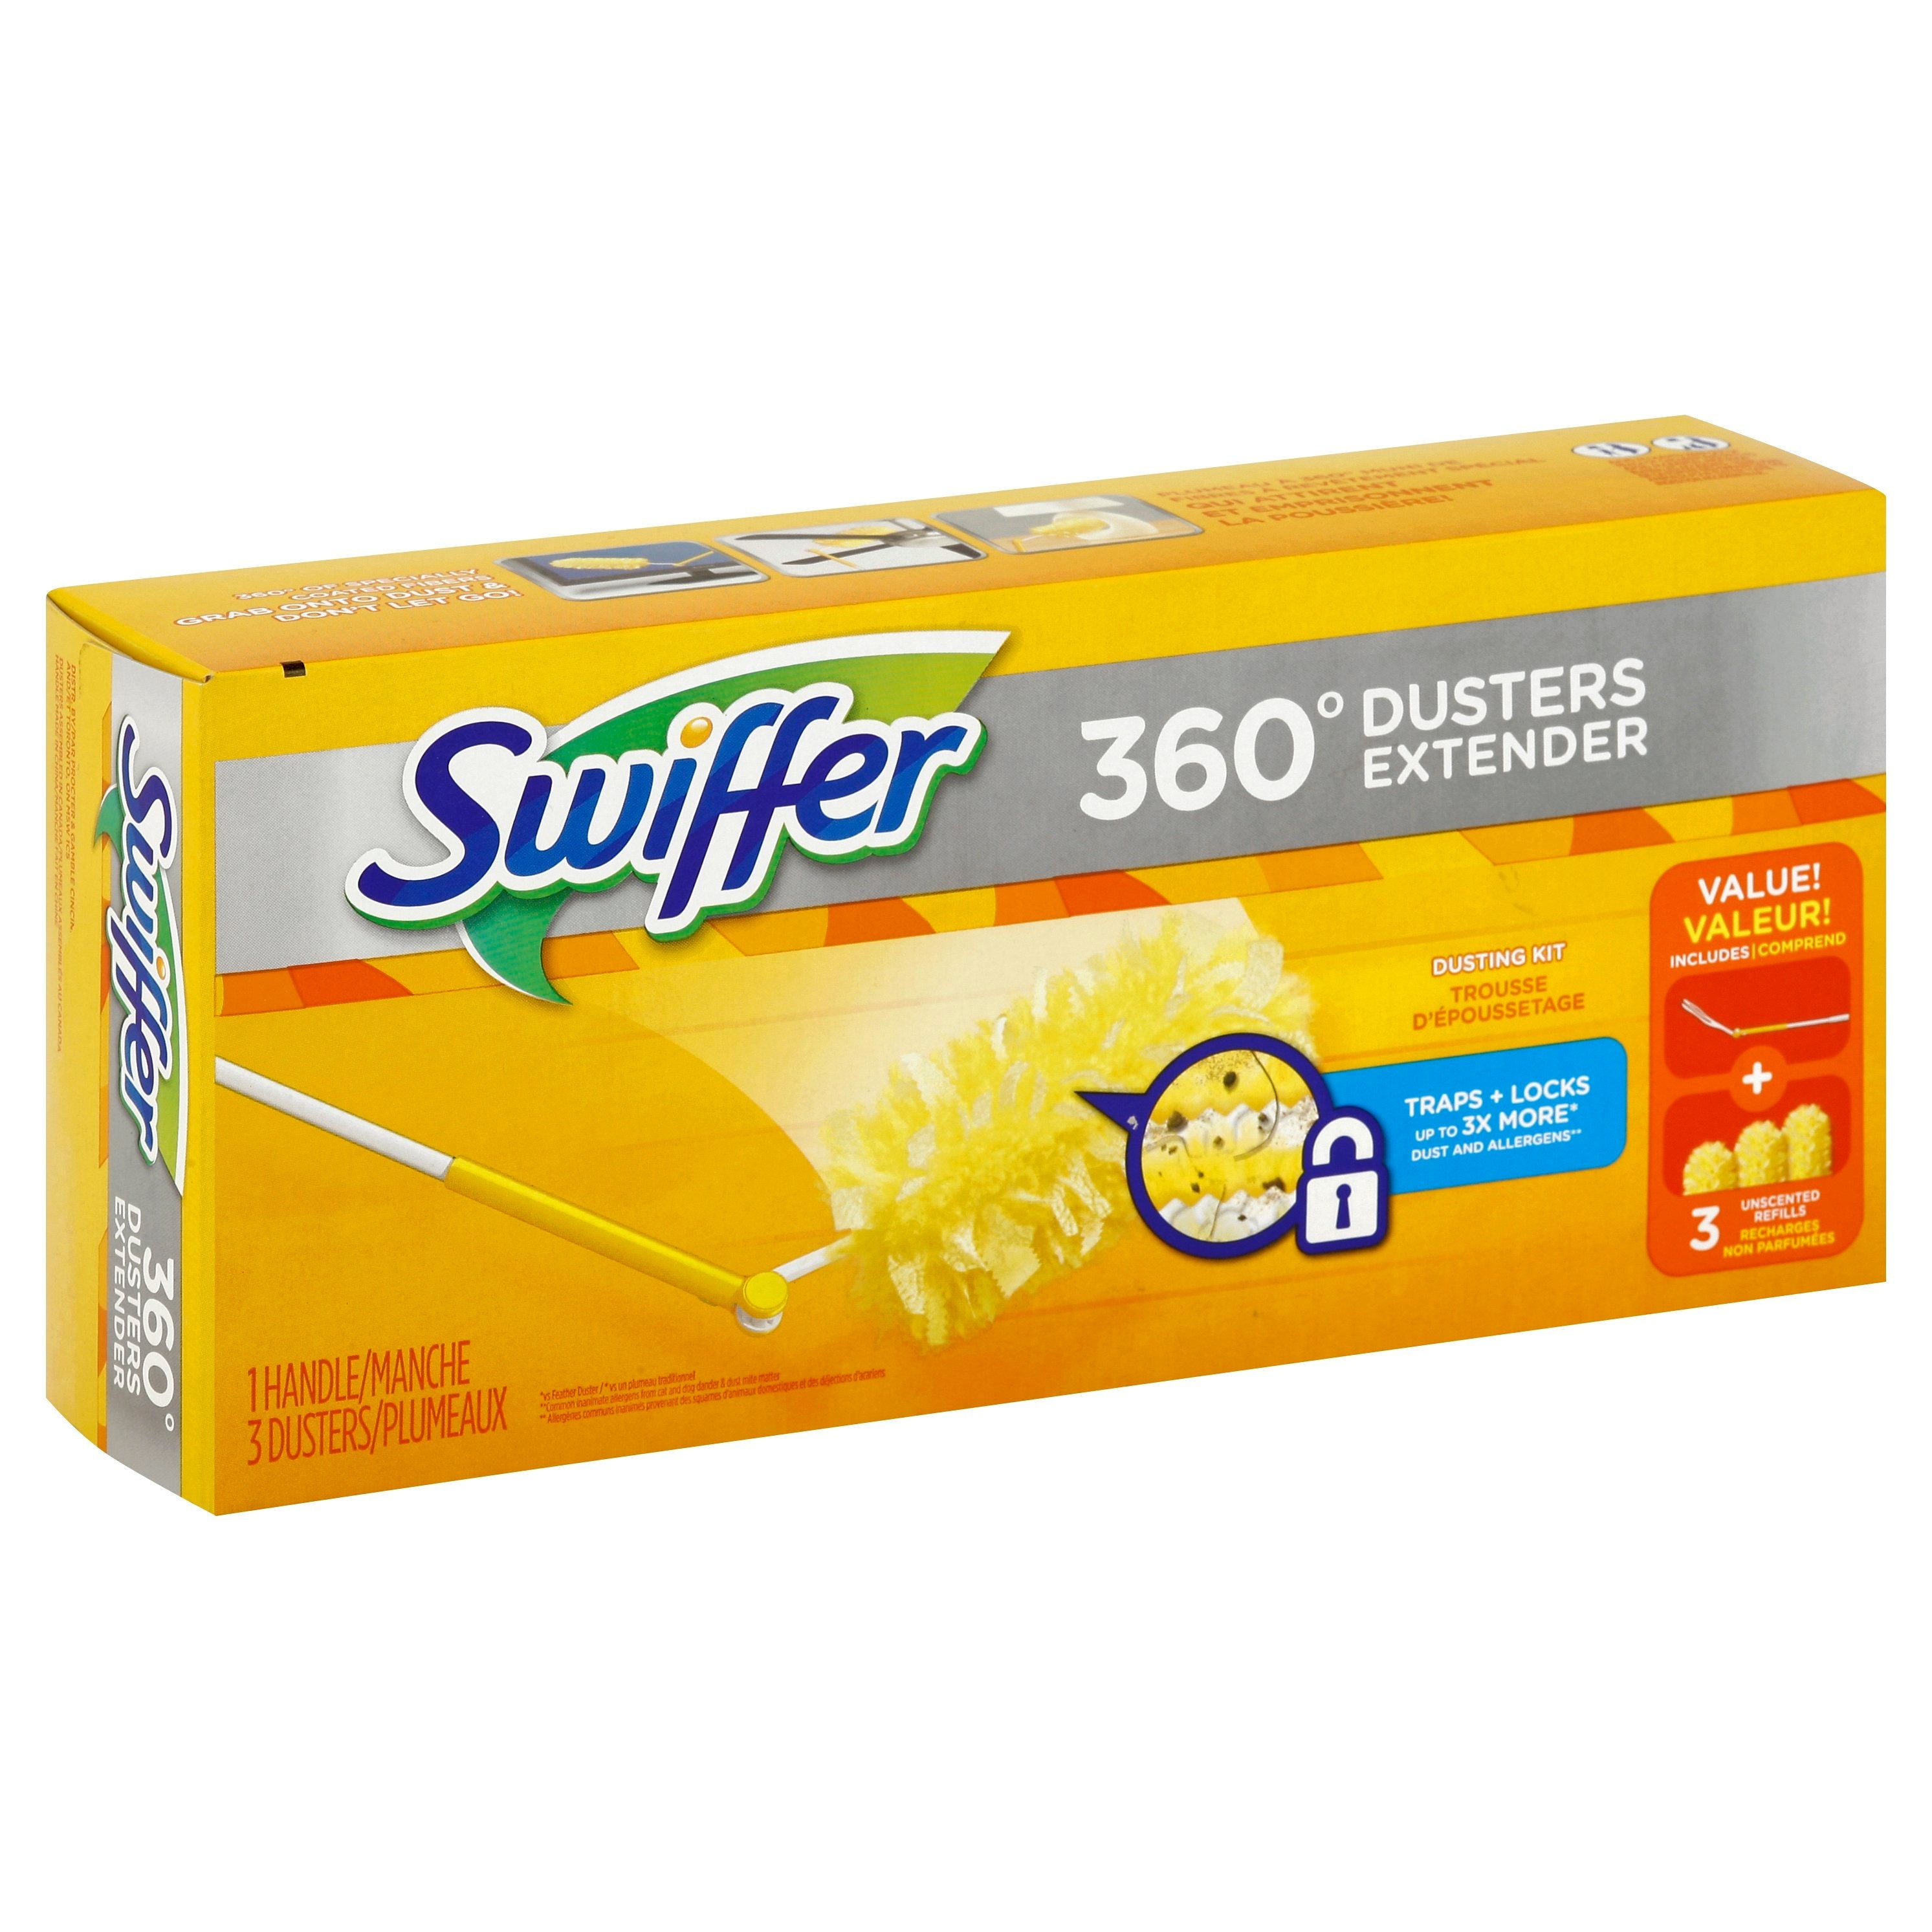 SWIFFER Set XXL (1 Handle + 2 Dusters) - Duster